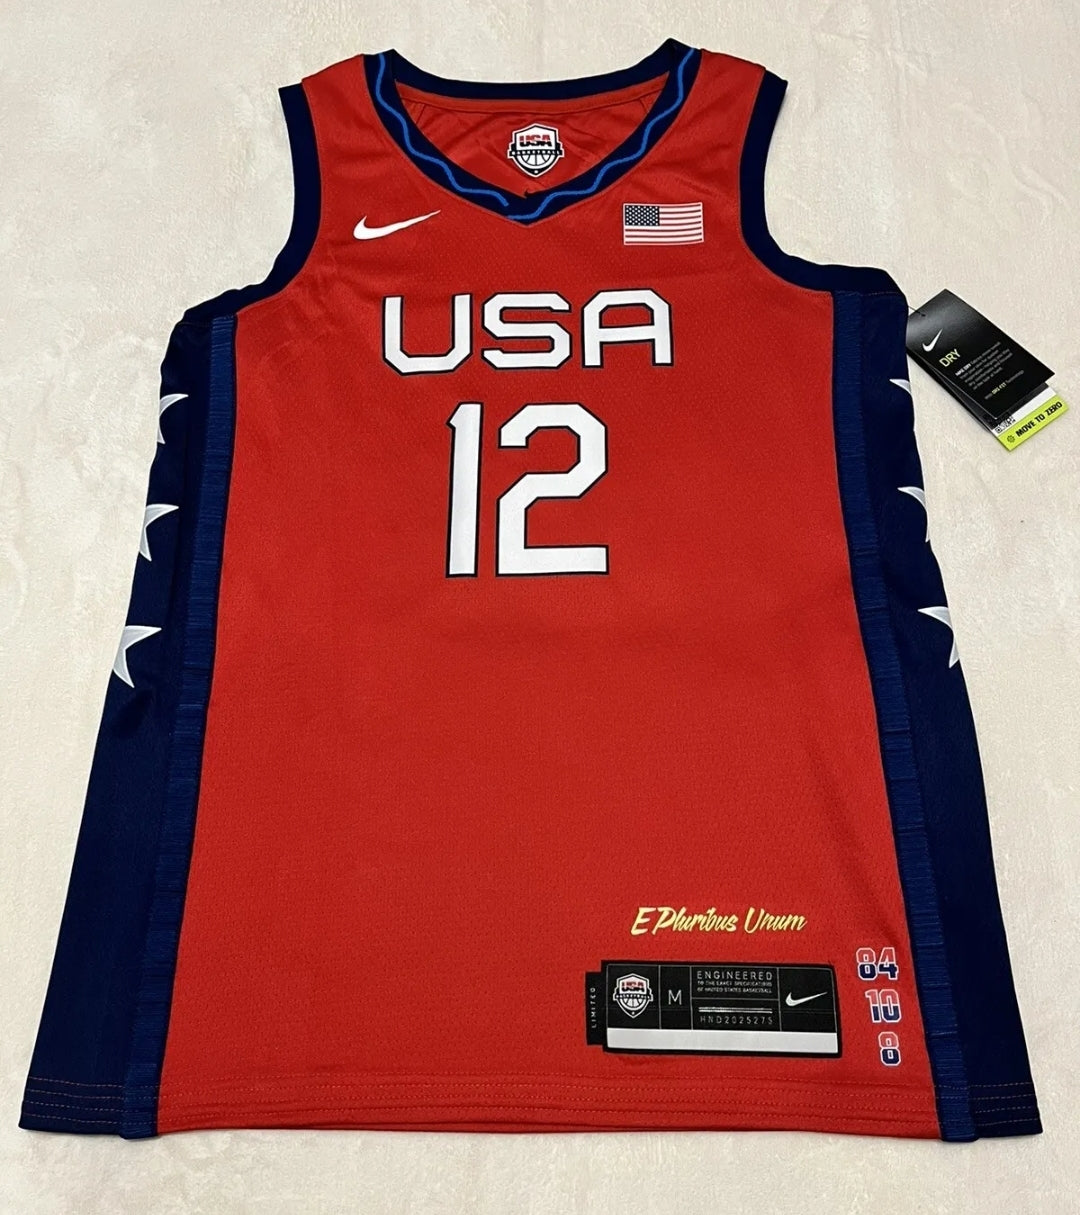 Nike Womens Team USA Basketball Jersey Medium #12 Diana Taurasi Tokyo Olympics.